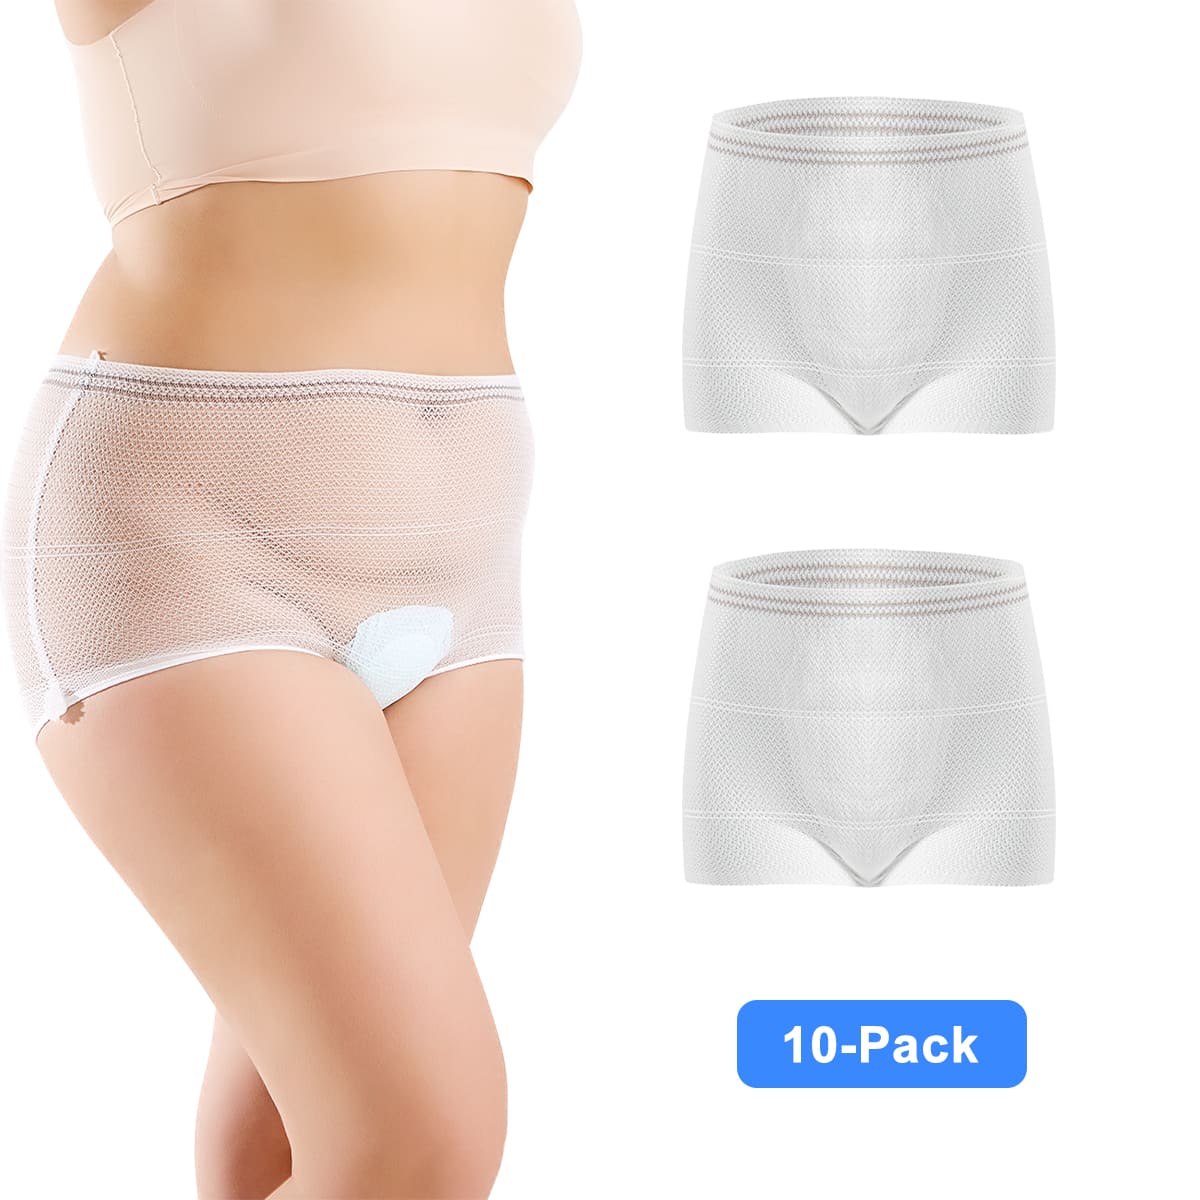 Disposable Mesh Postpartum Underwear for Hospitals, Malaysia